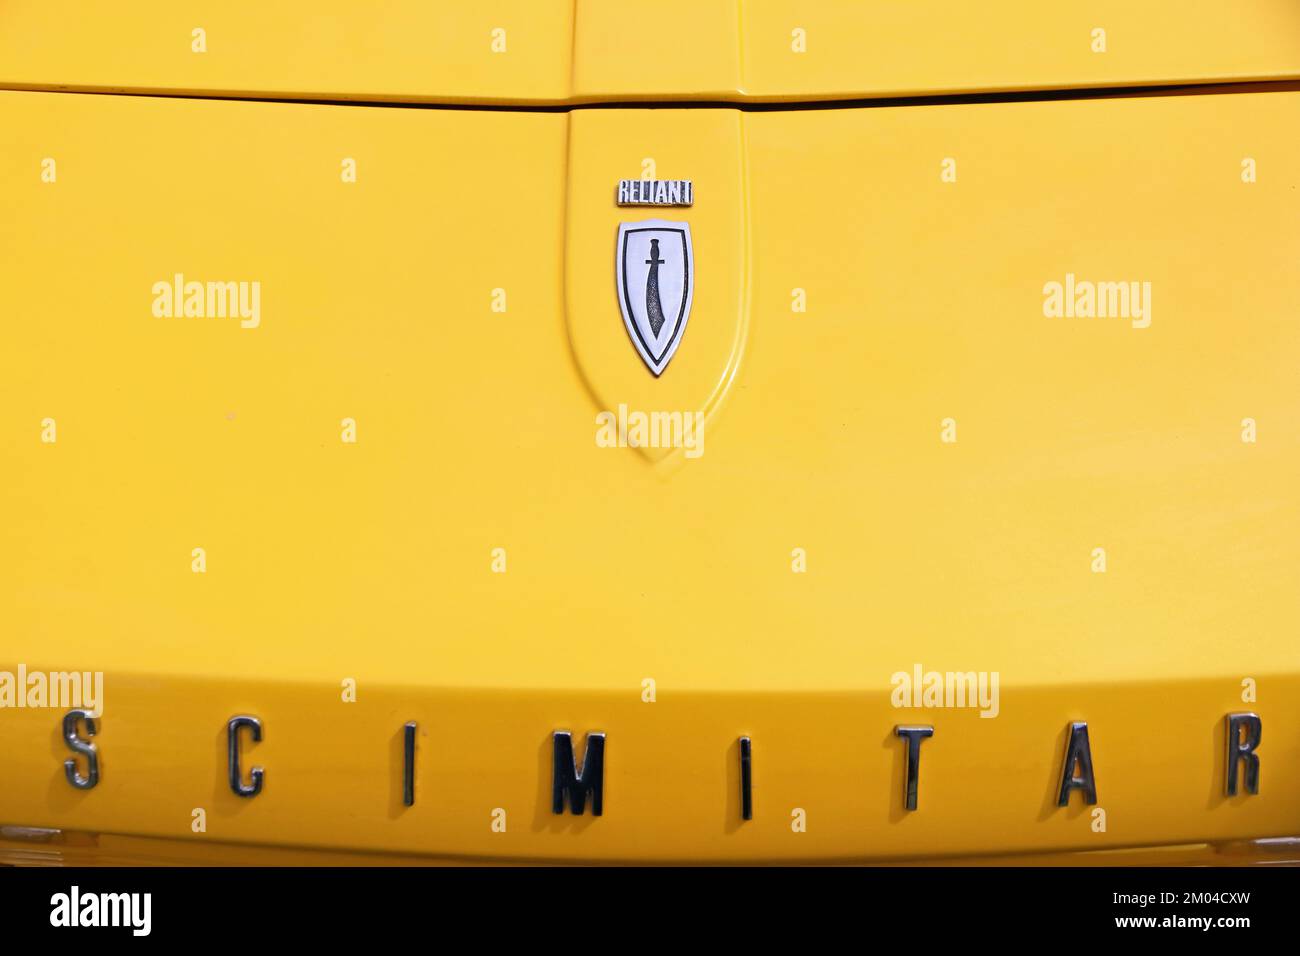 Reliant Scimitar sportscar badge Stock Photo